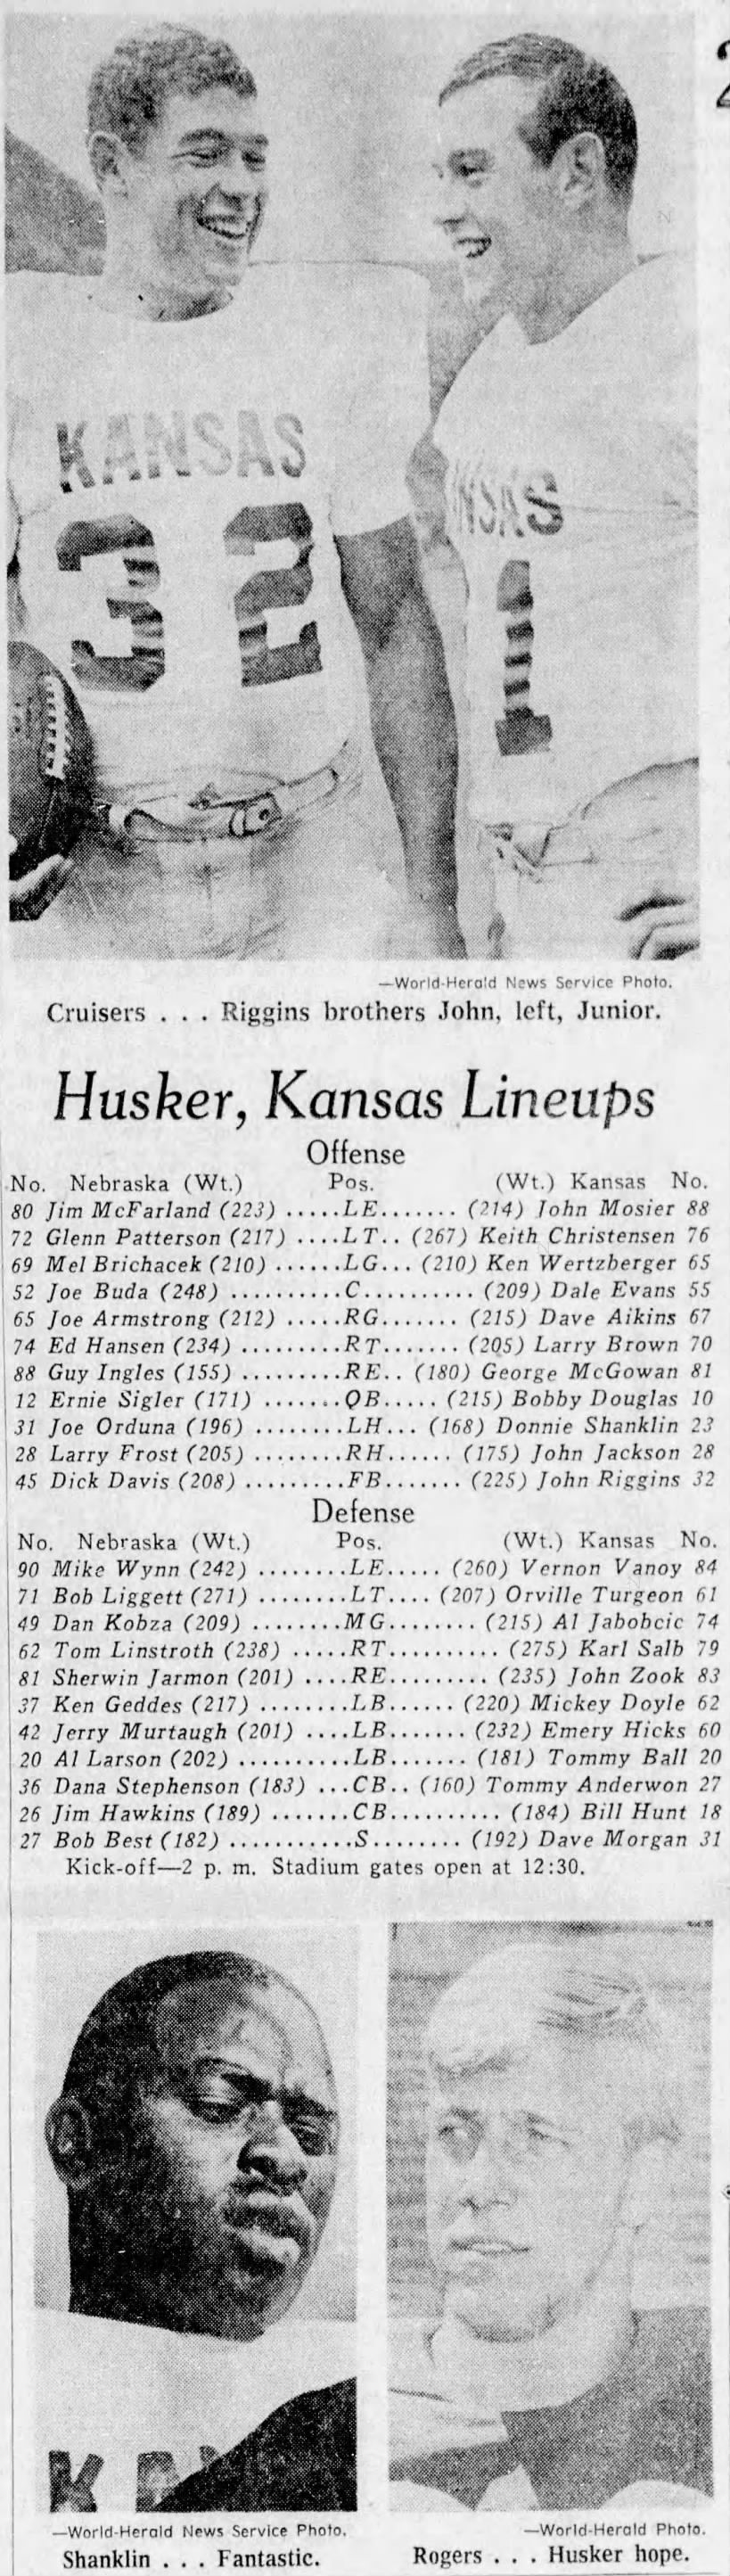 1968 Nebraska-Kansas football game lineups